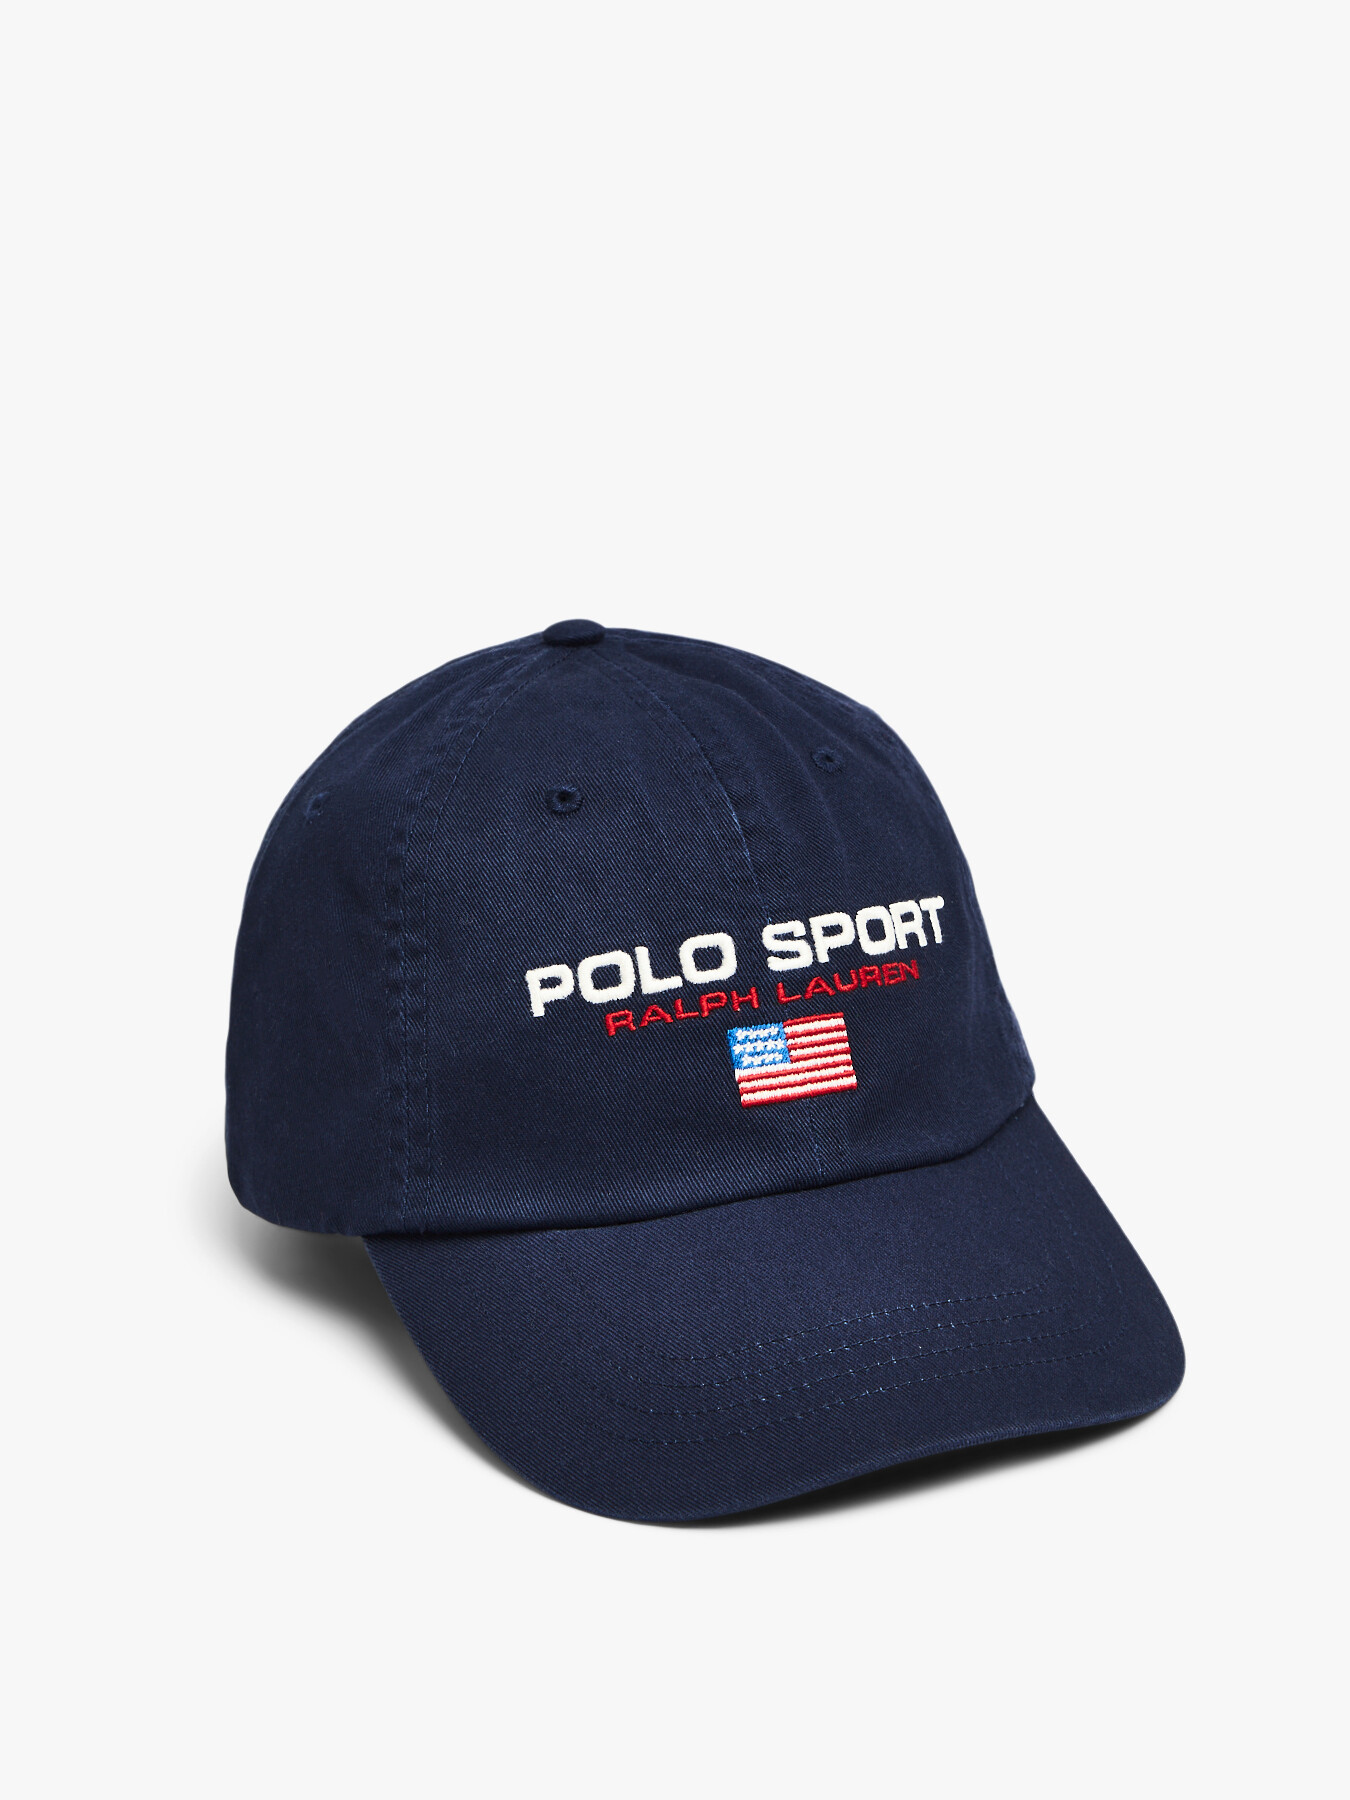 Men's Polo Ralph Lauren Polo Sport Cap | Caps | Fenwick